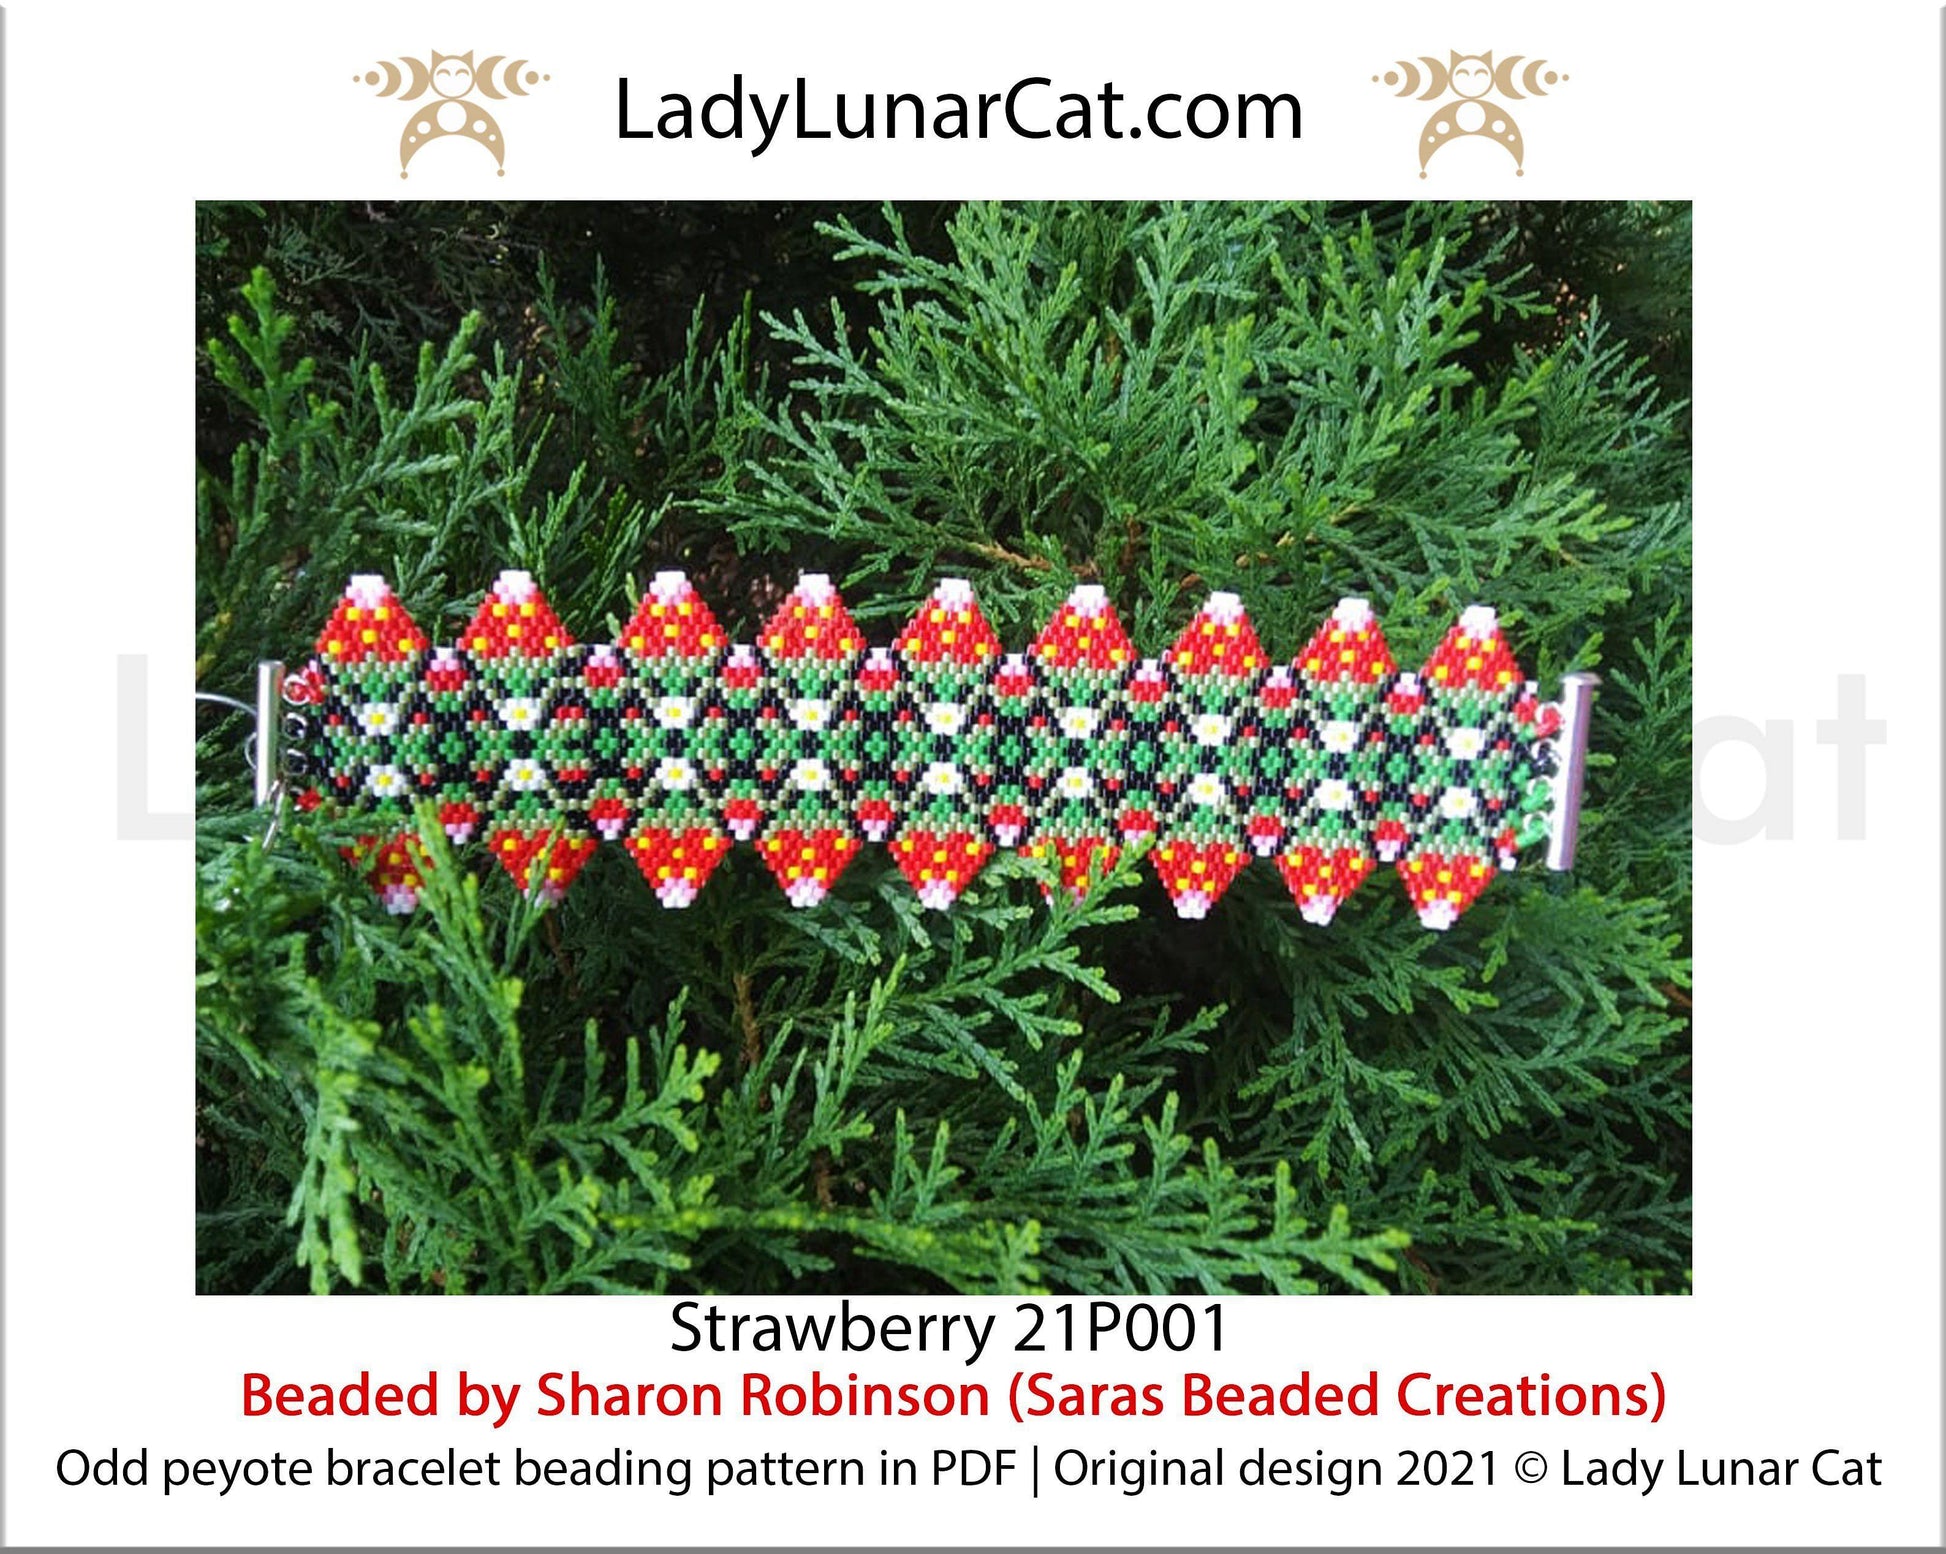 Odd count peyote bracelet pattern for beading Strawberry 21P001 LadyLunarCat